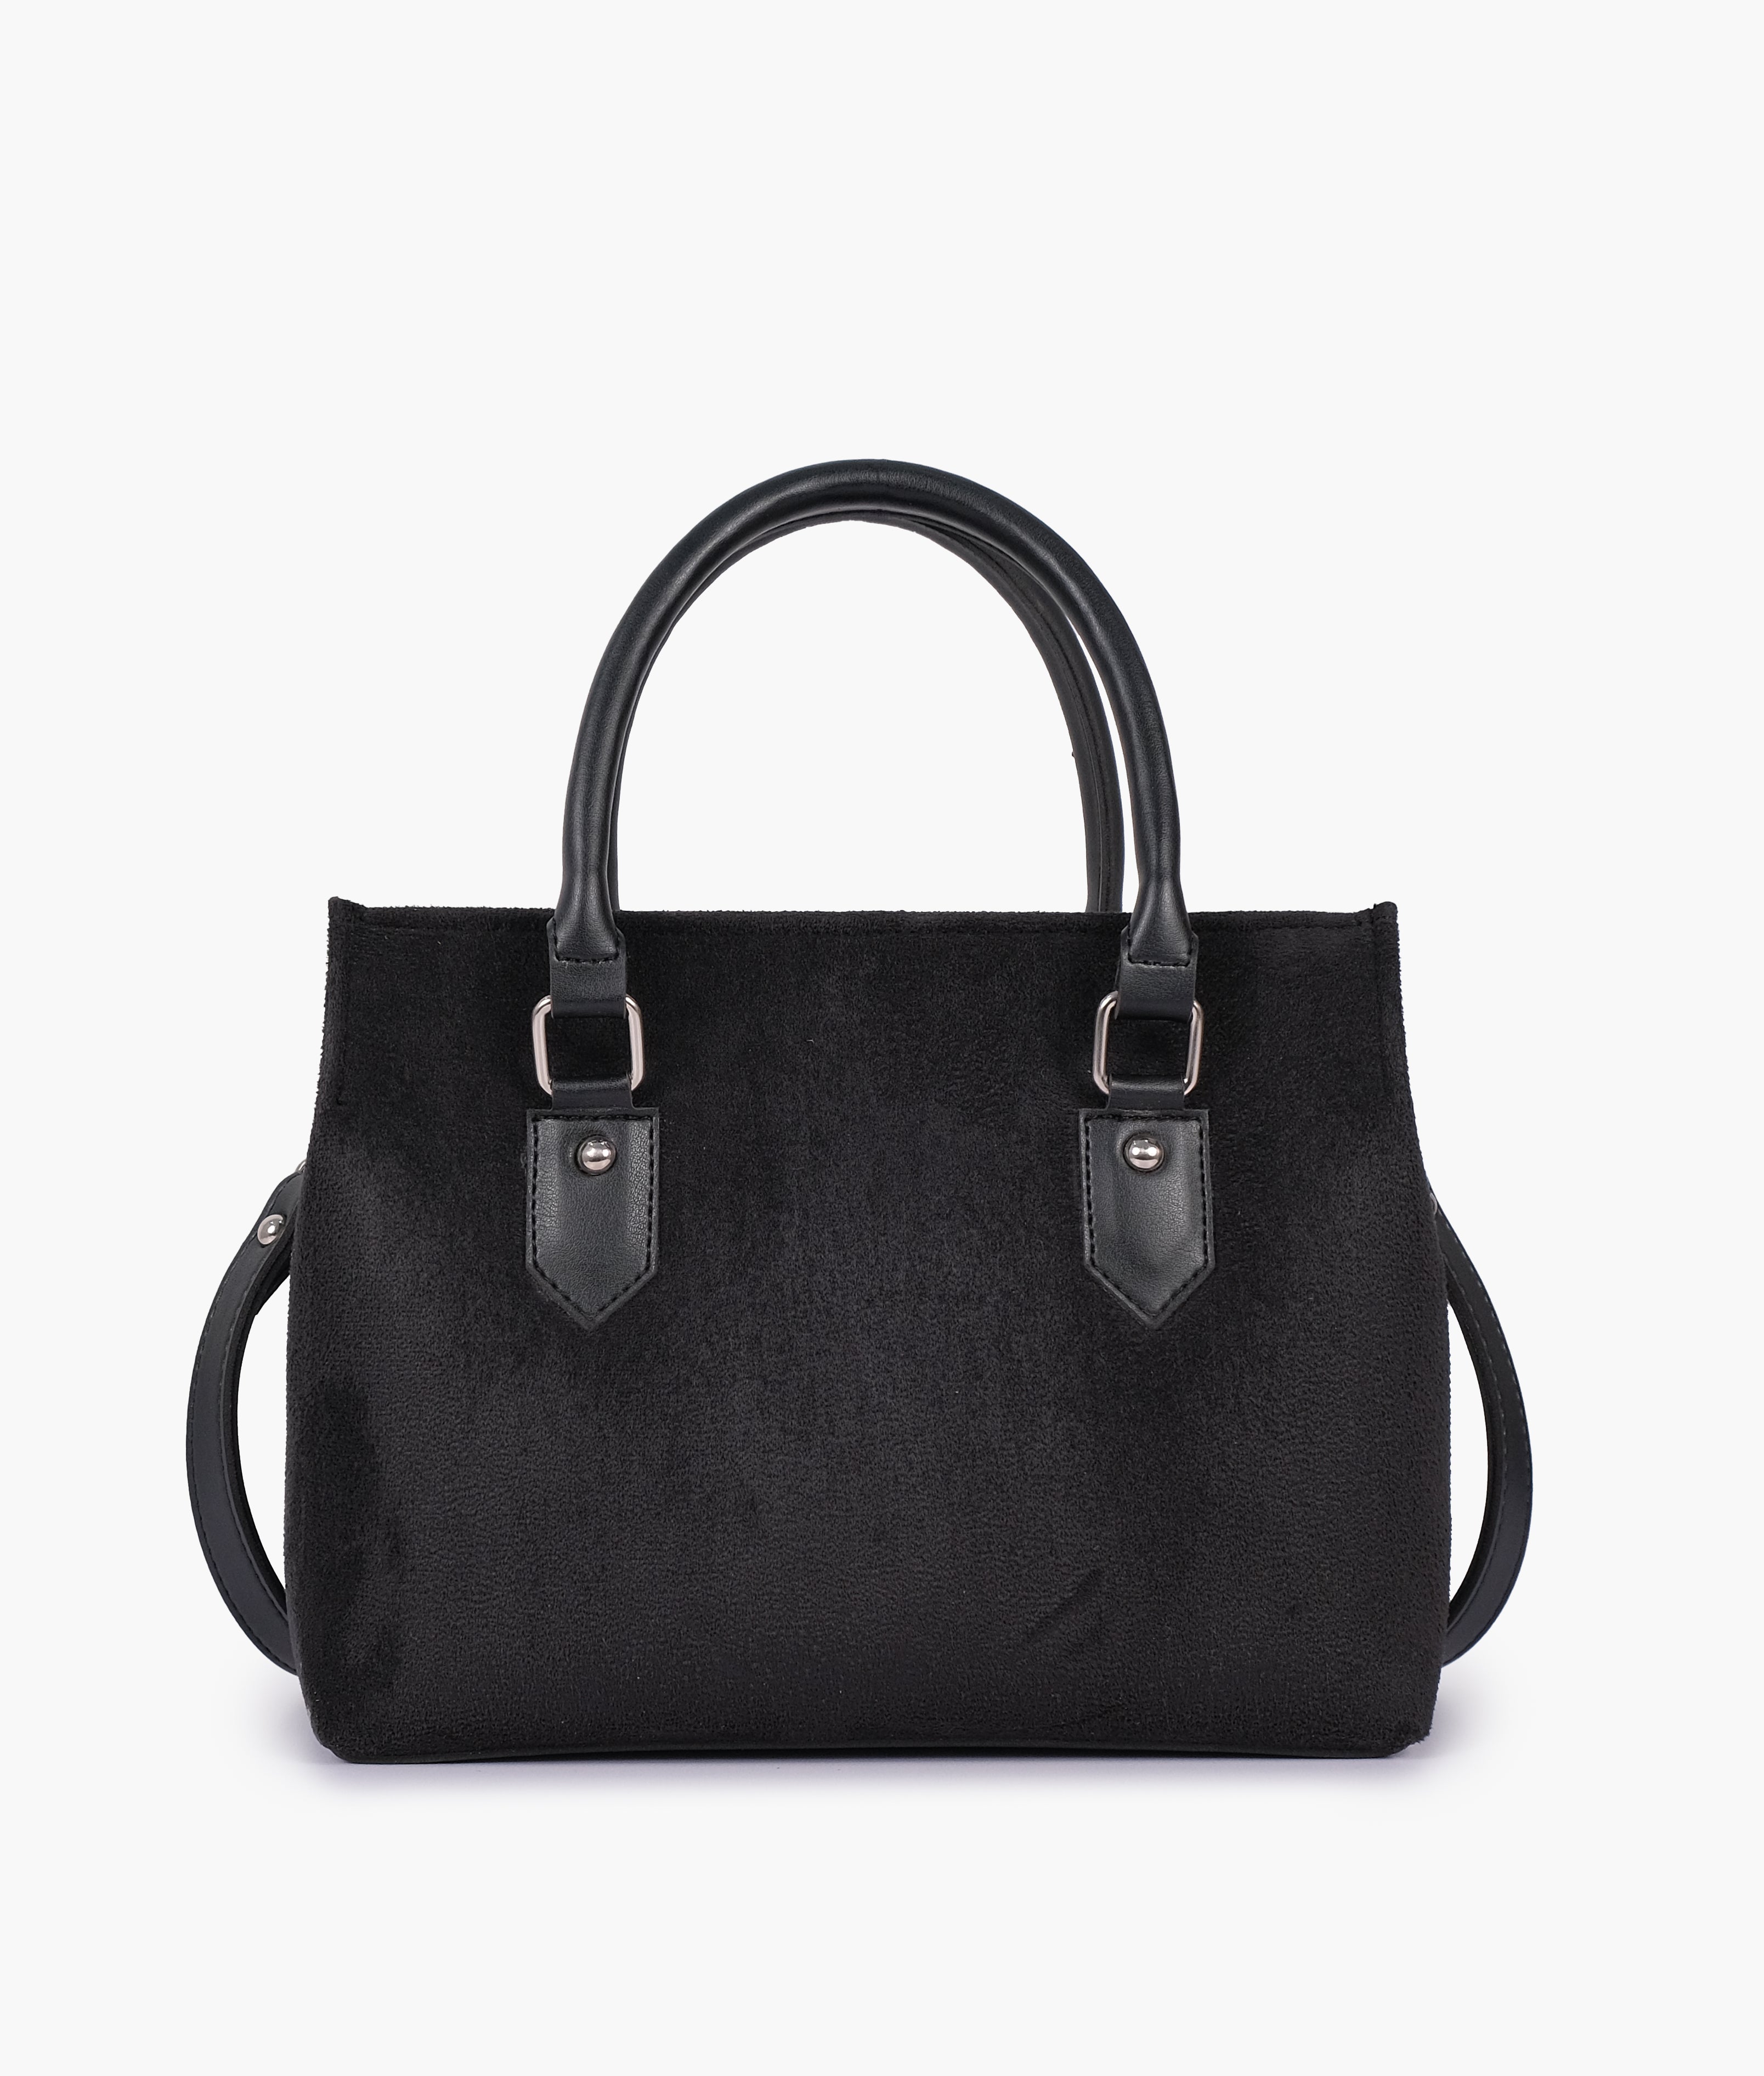 Black suede small satchel bag